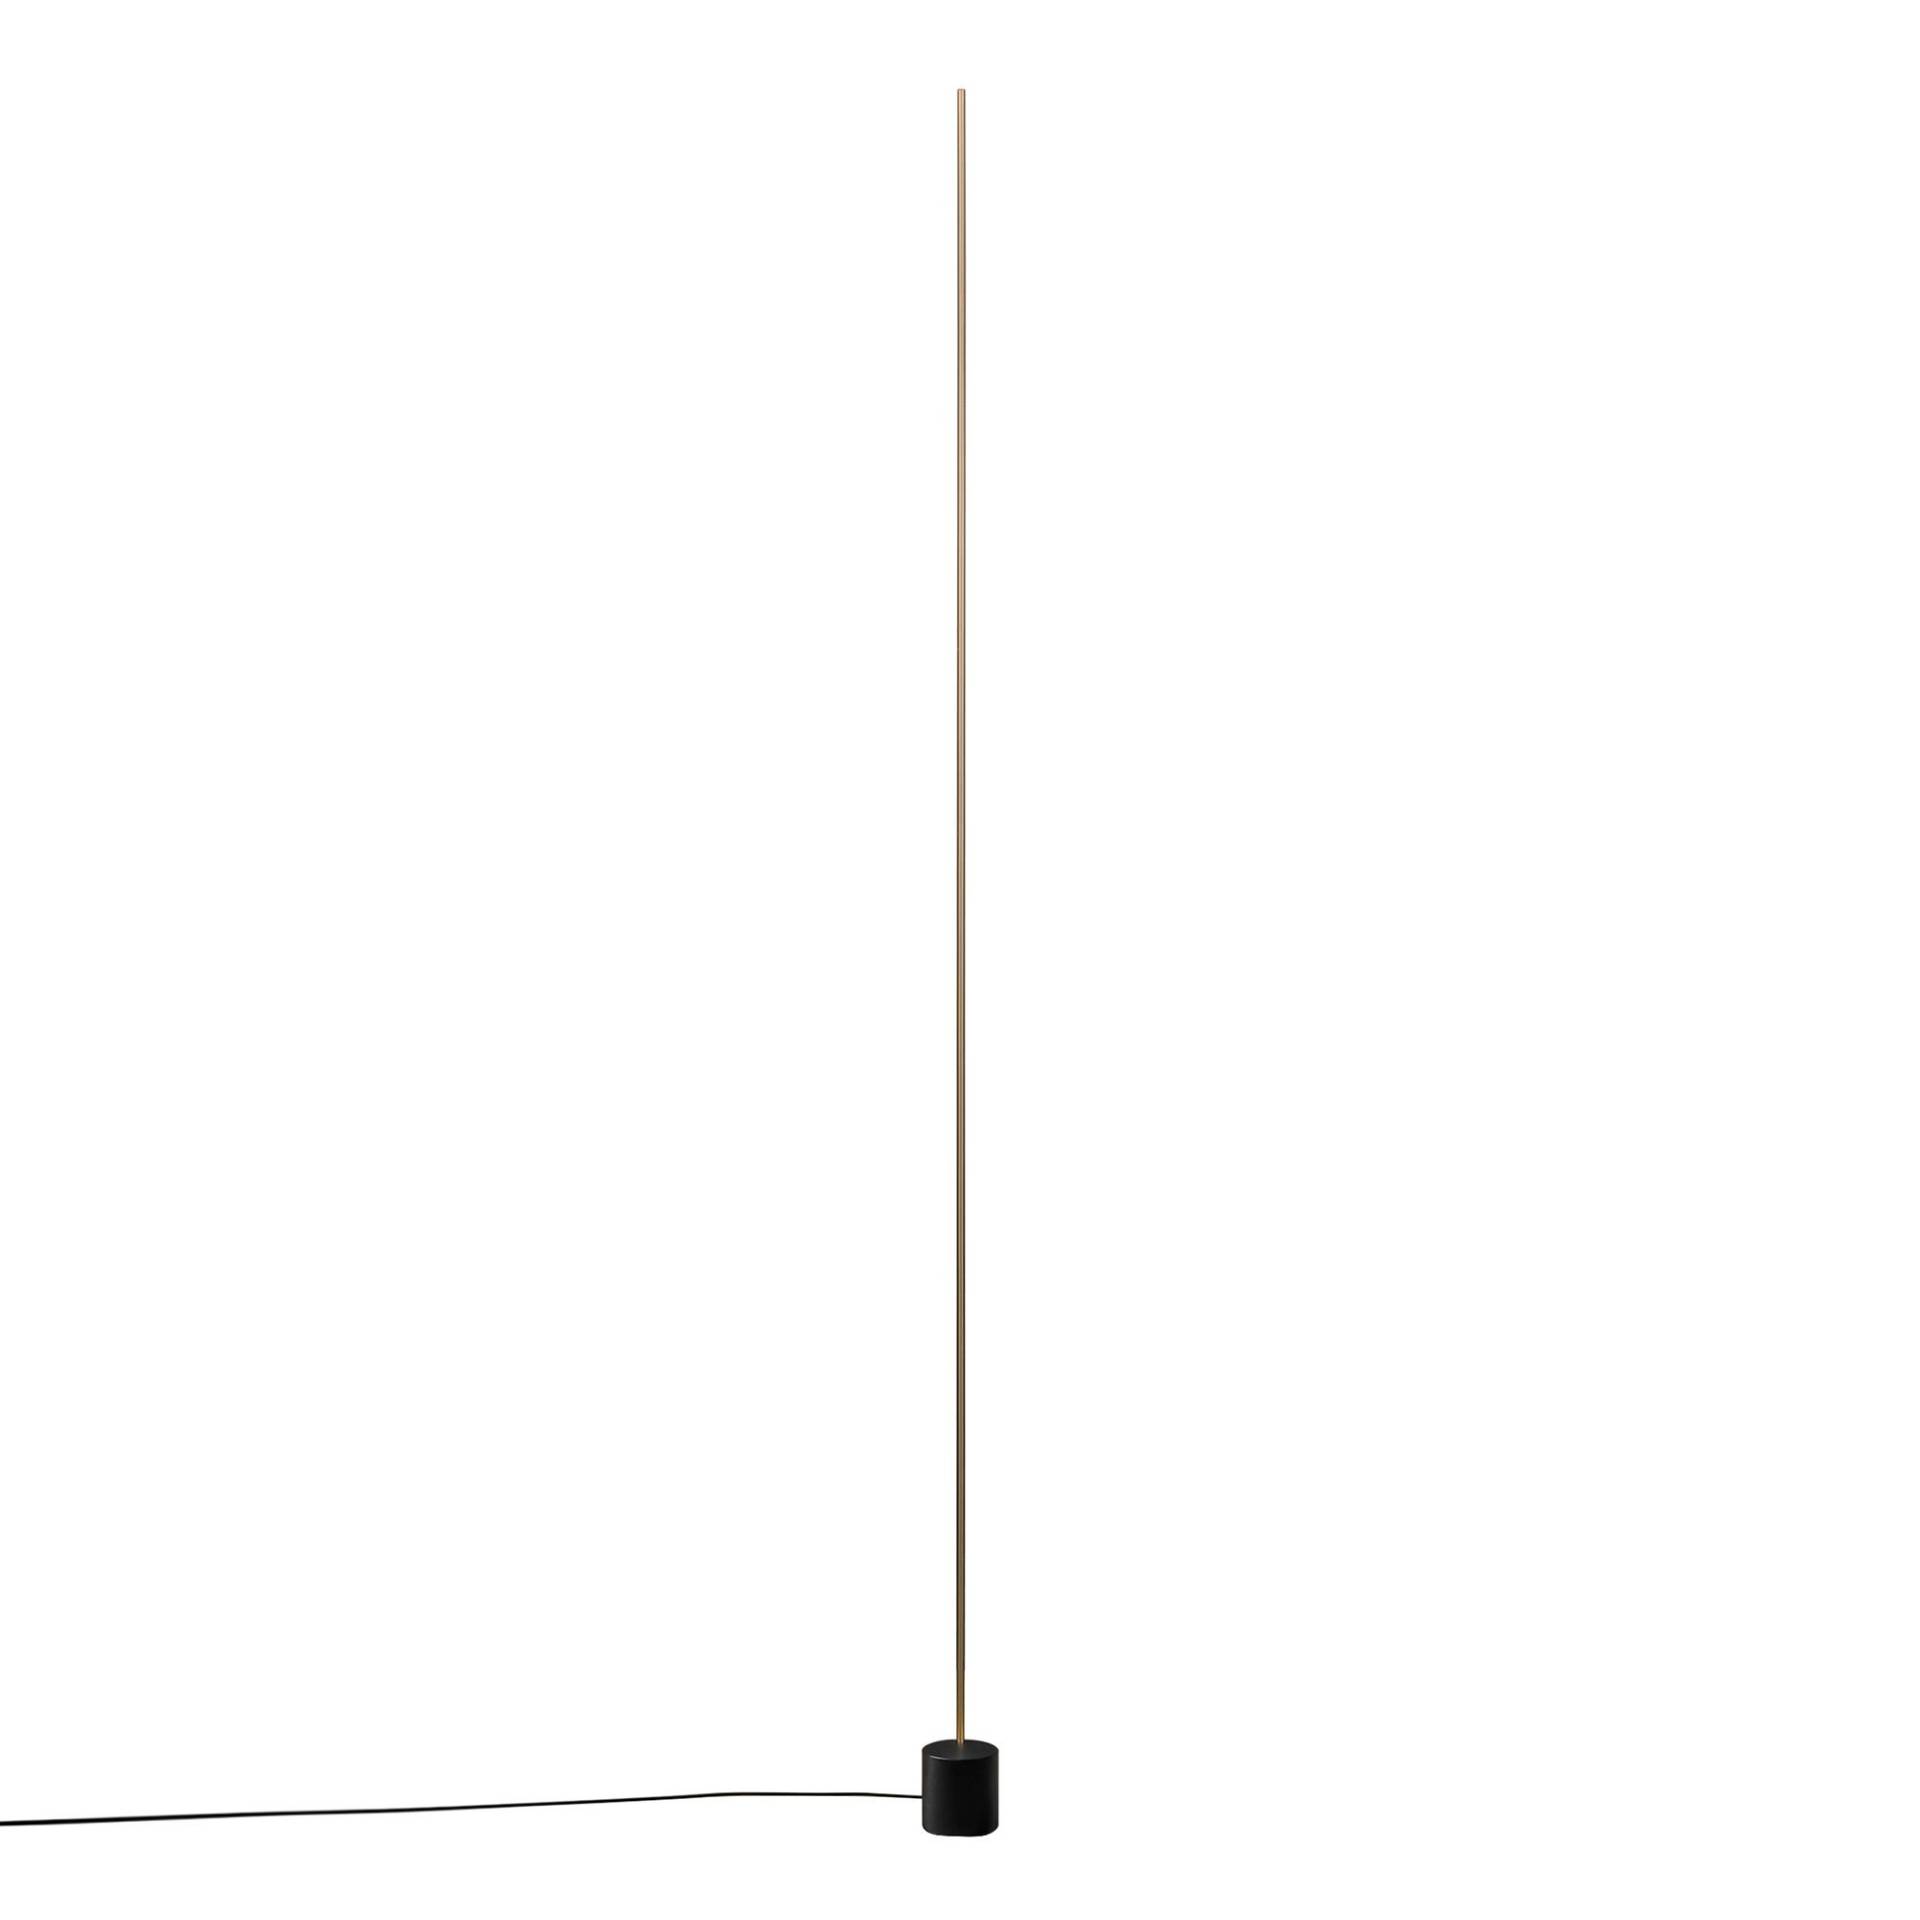 Catellani & Smith - Light Stick F LED Stehleuchte - satin gold/H 183cm/Fußdimmer/LED 10x1W/350mA/110-240V/1400lm/2700K/CRI80 von Catellani & Smith